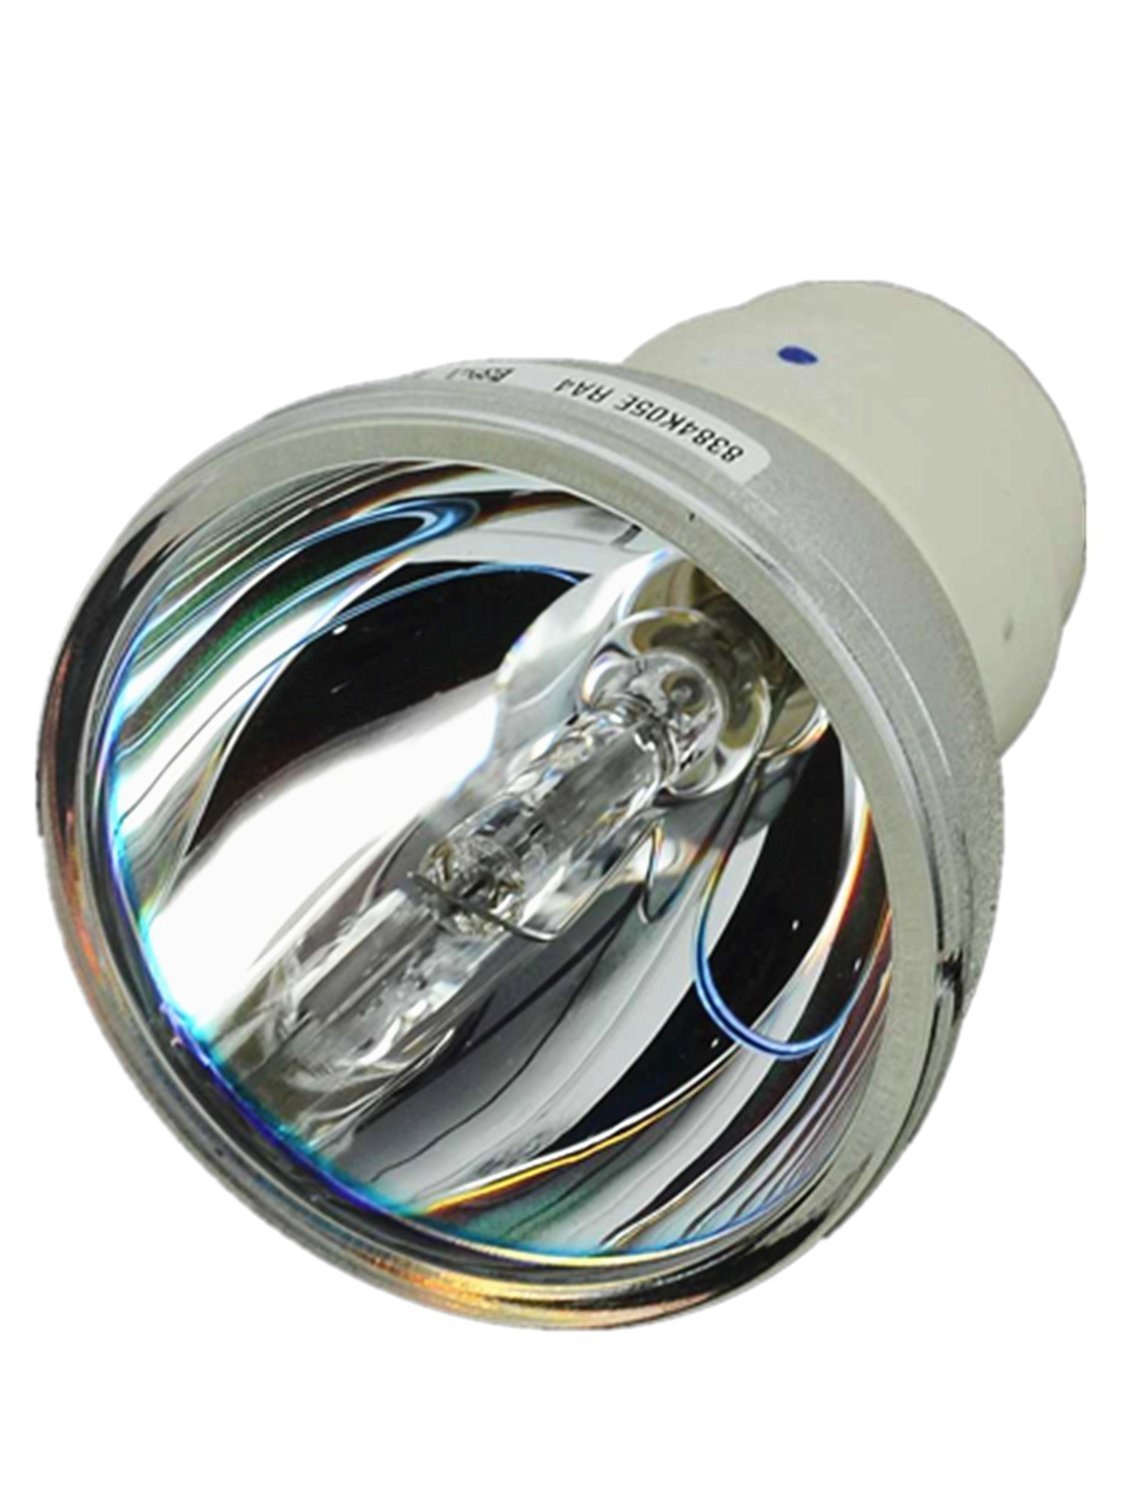 DLT 330 9847/725 10225 Original Projector Bare Bulb for DELL S300 S300W S300WI